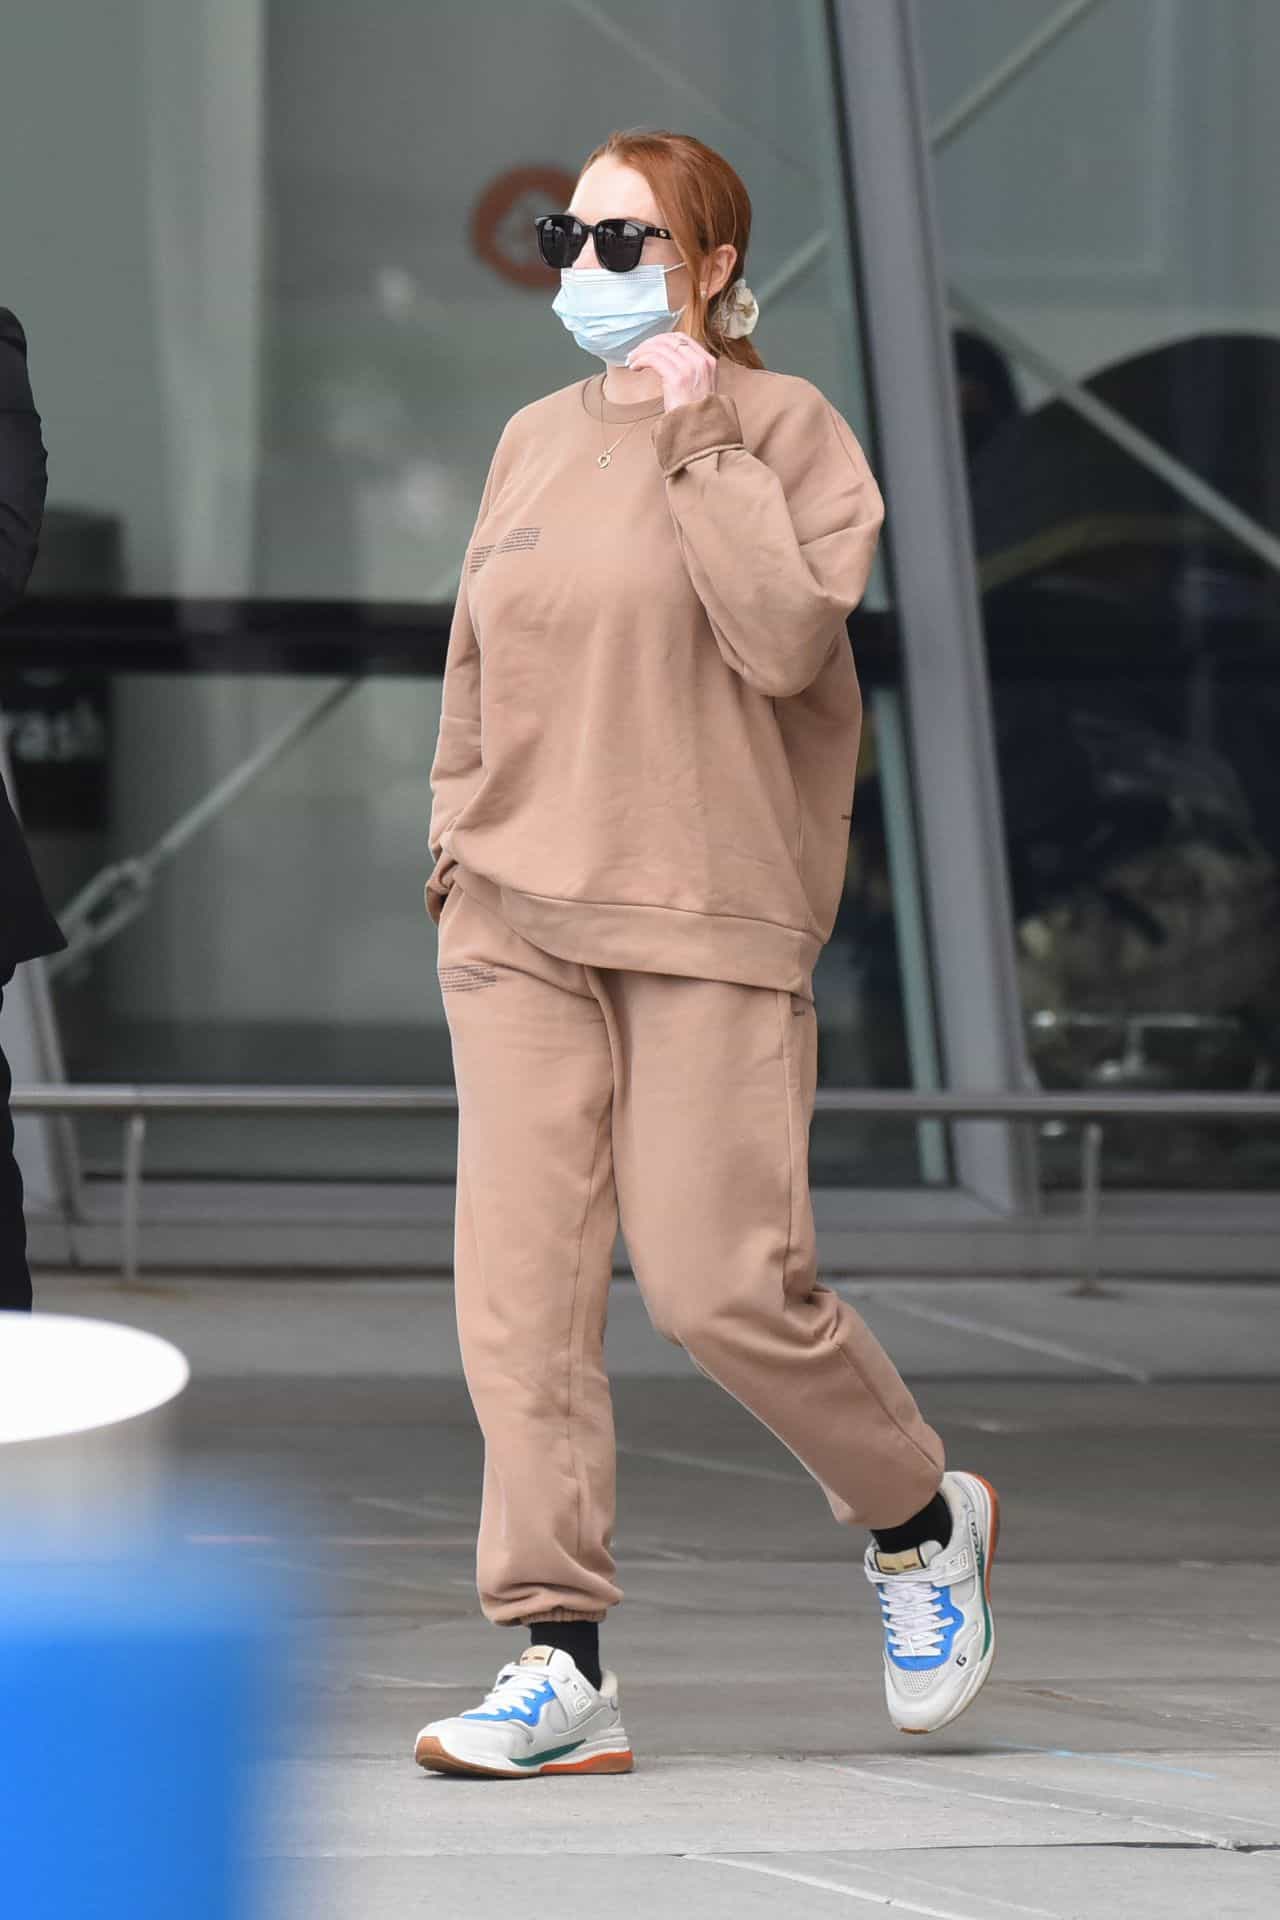 Lindsay Lohan in a Comfy Organic Sweatsuit at JFK Airport in New York